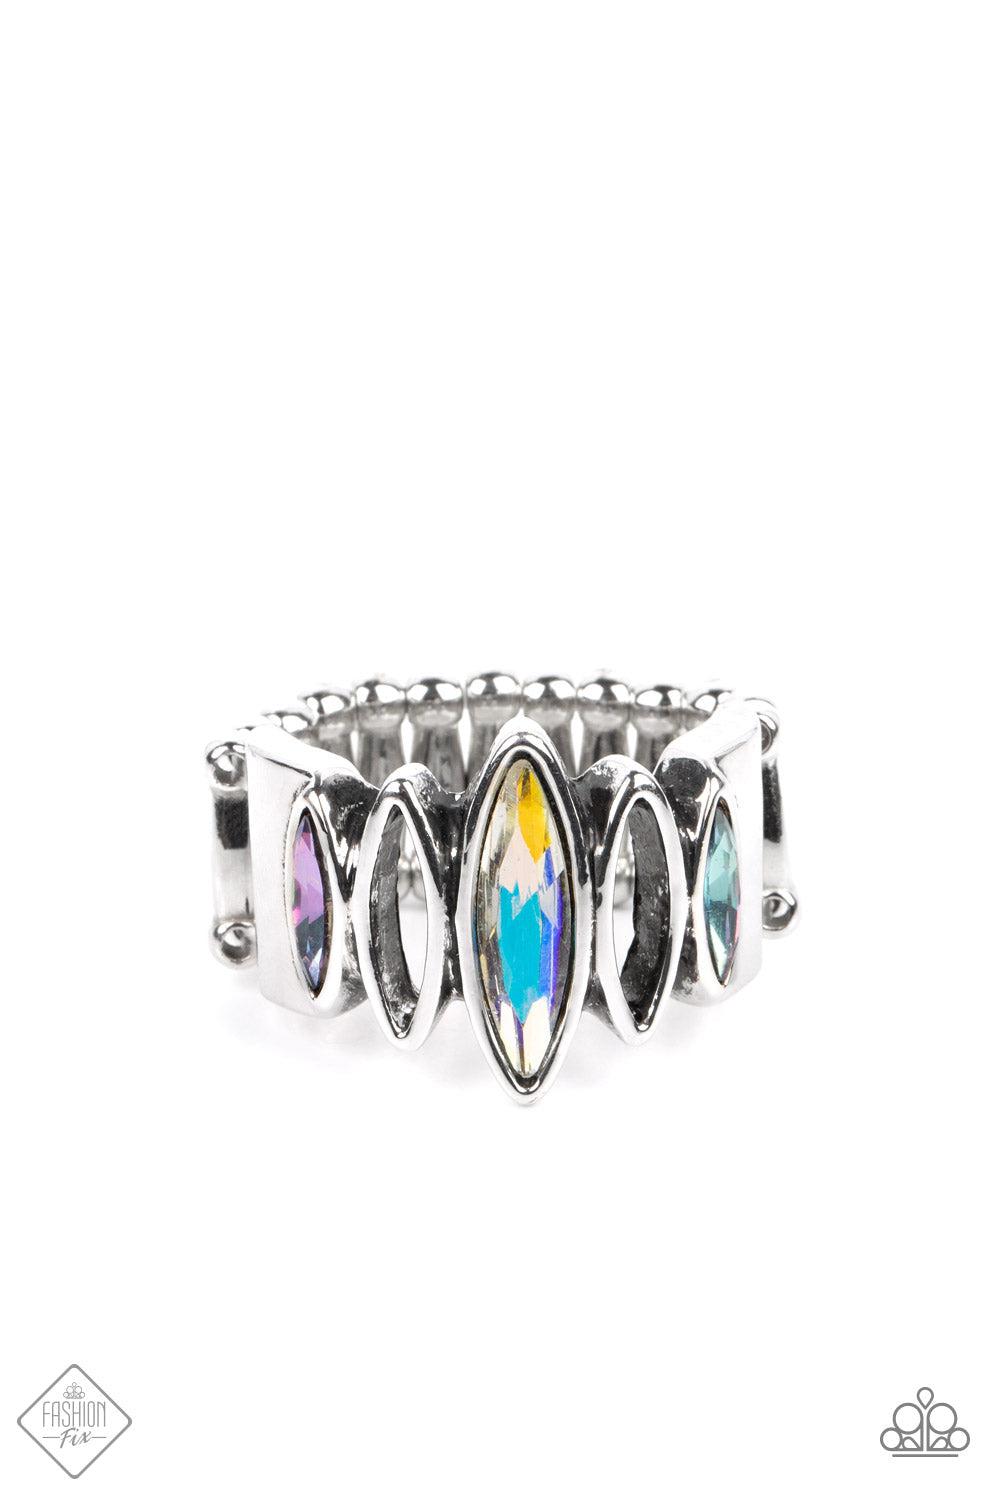 Distant Cosmos Multi Iridescent Rhinestone Ring - Paparazzi Accessories- lightbox - CarasShop.com - $5 Jewelry by Cara Jewels